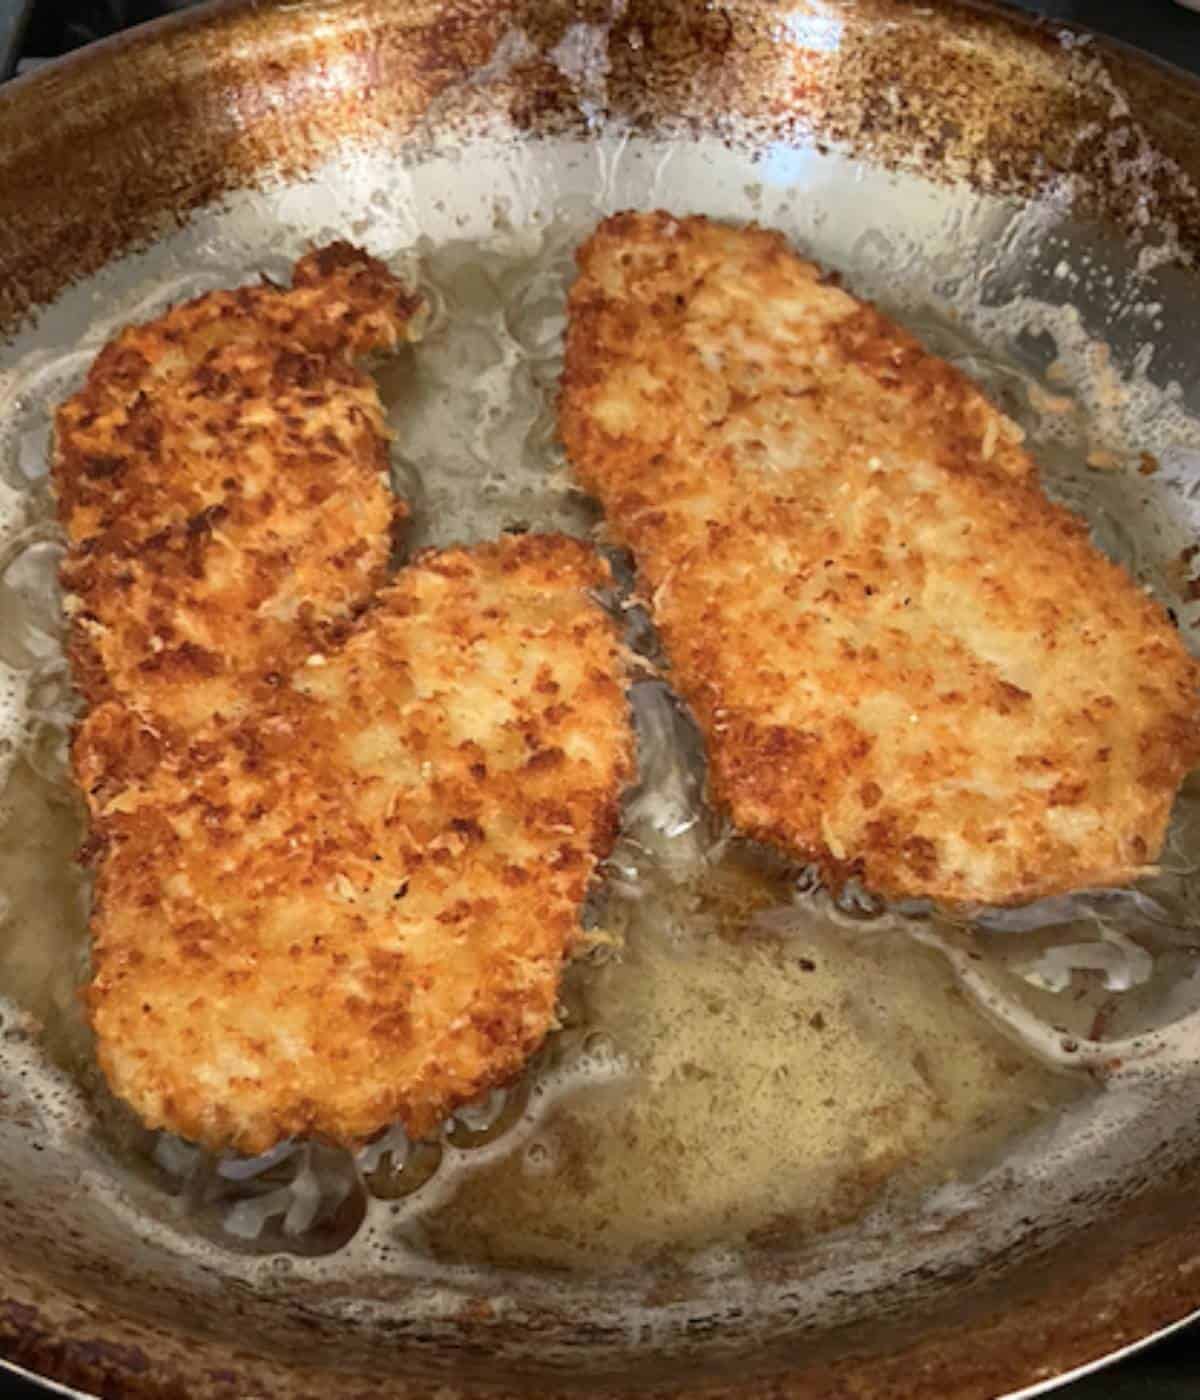 Chicken romano frying in oil in stainless steel pan.